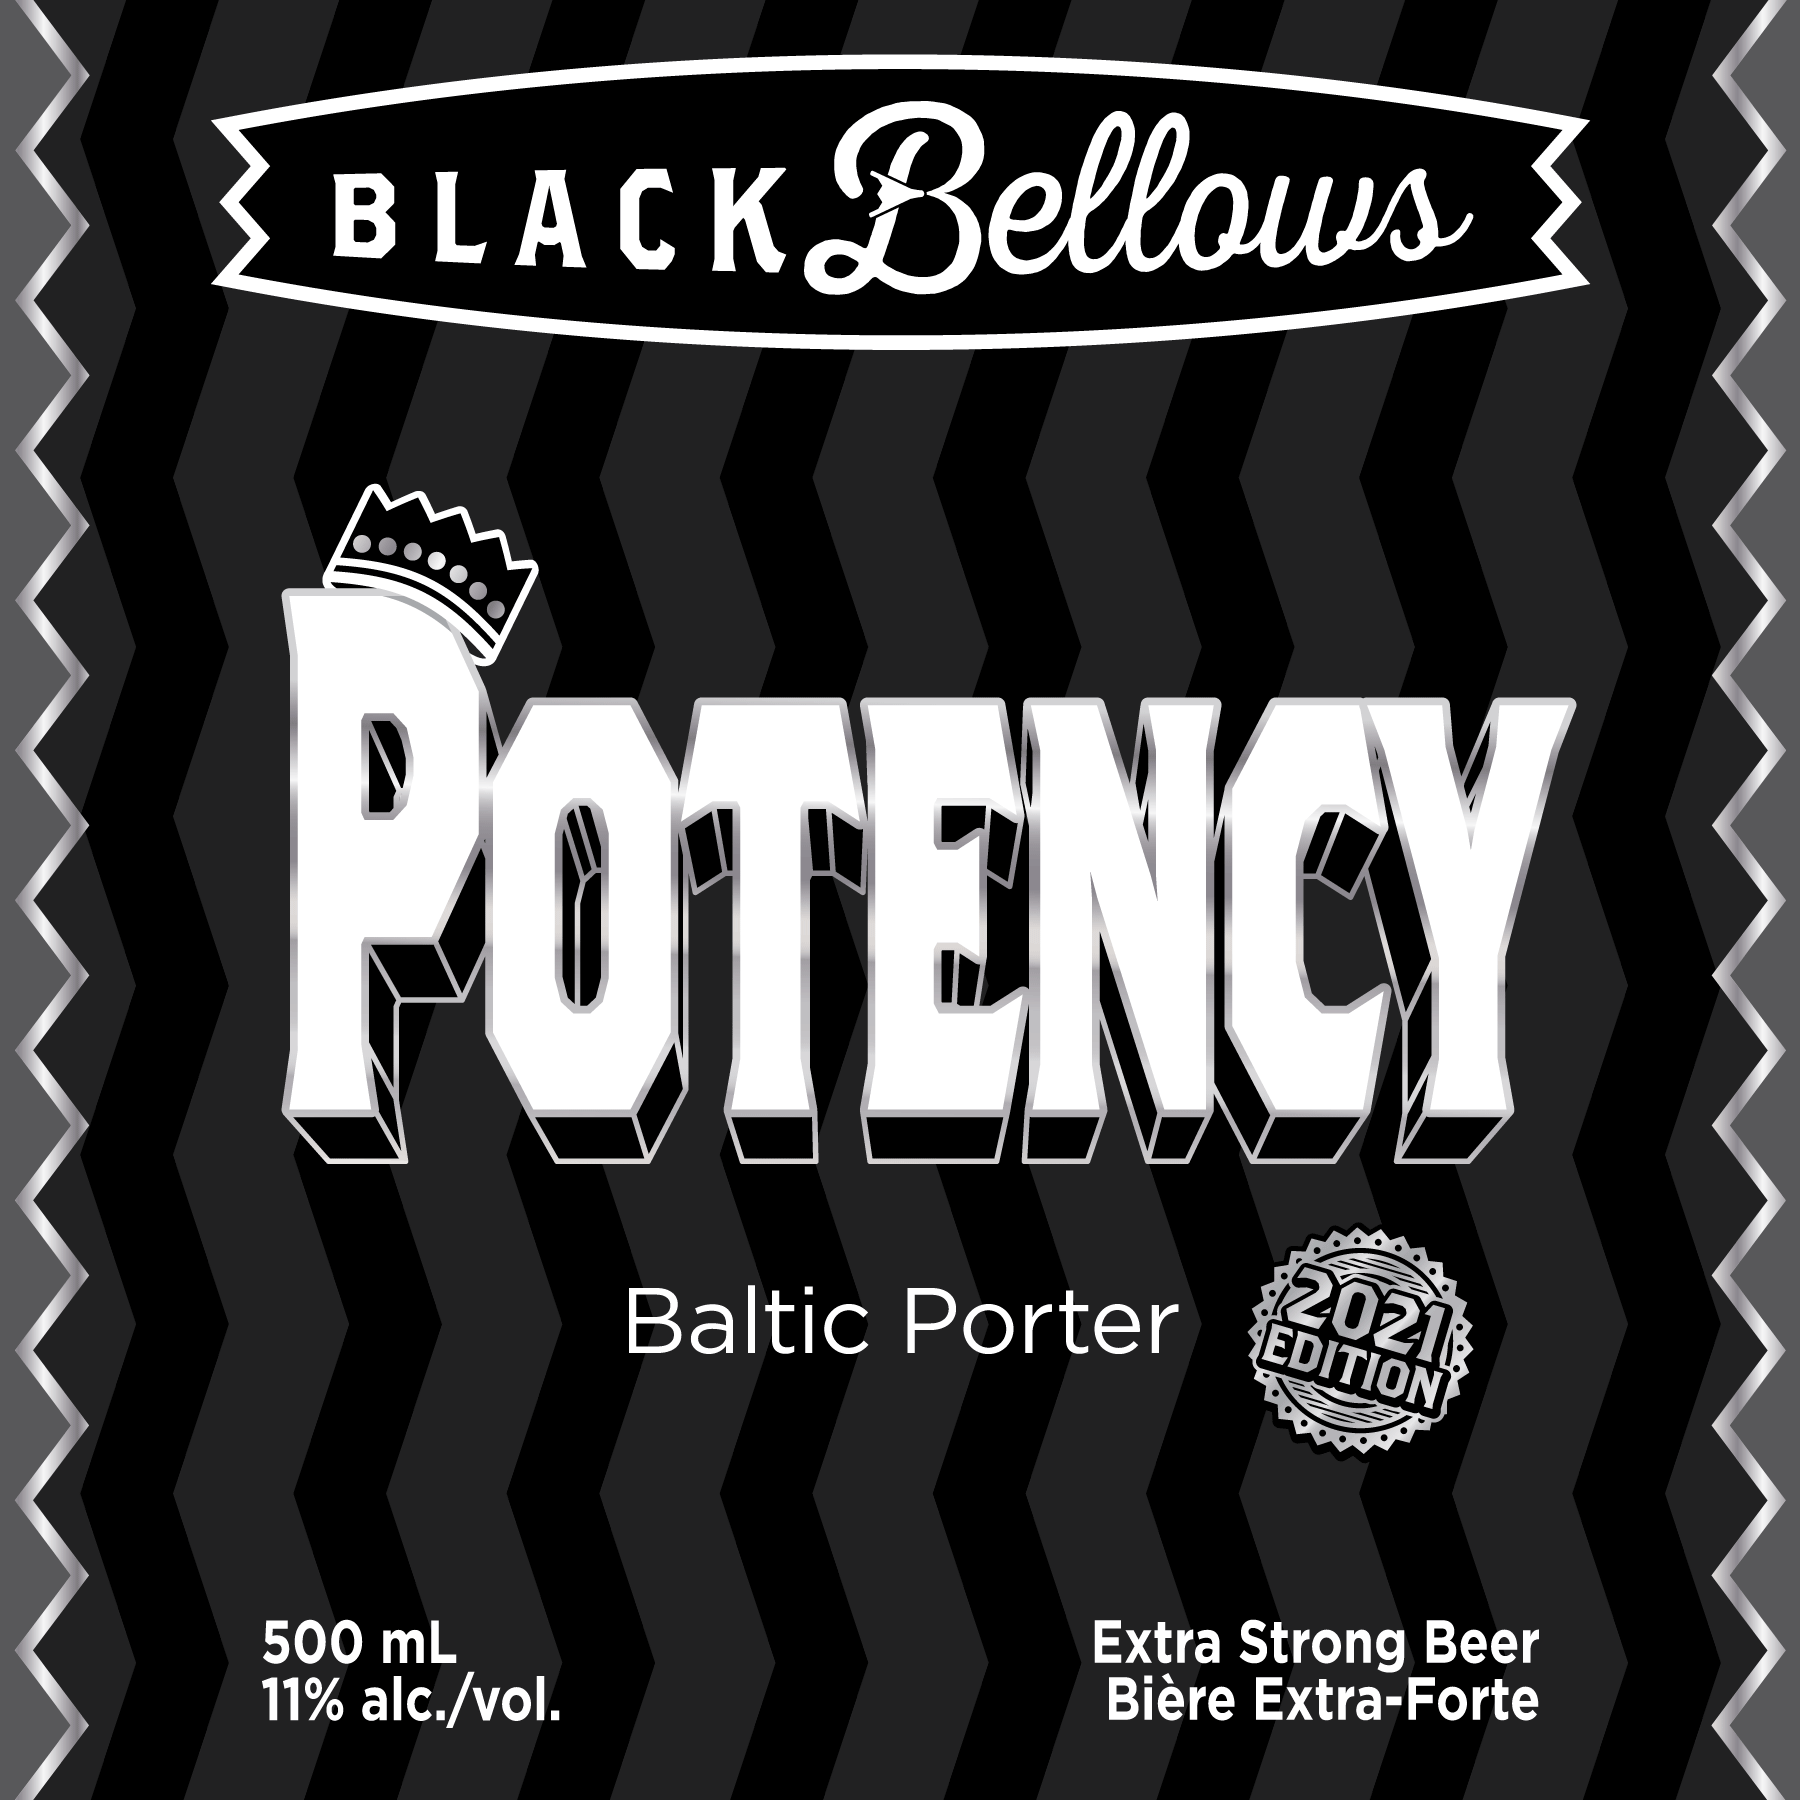 Potency Baltic Porter 2021 Edition